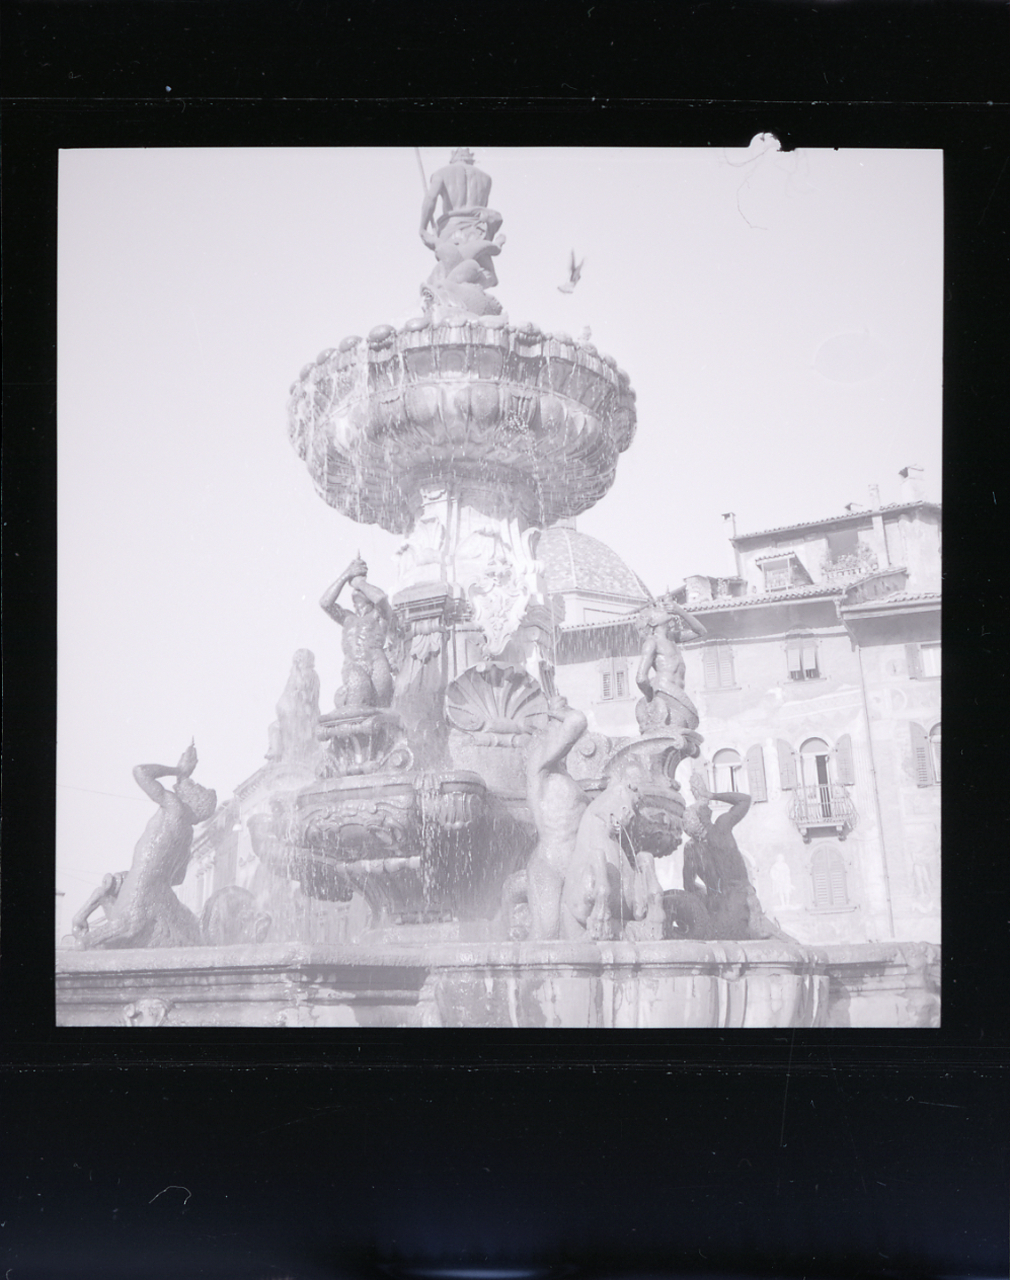 Servizio fotografico (Trento, 1962) - lang